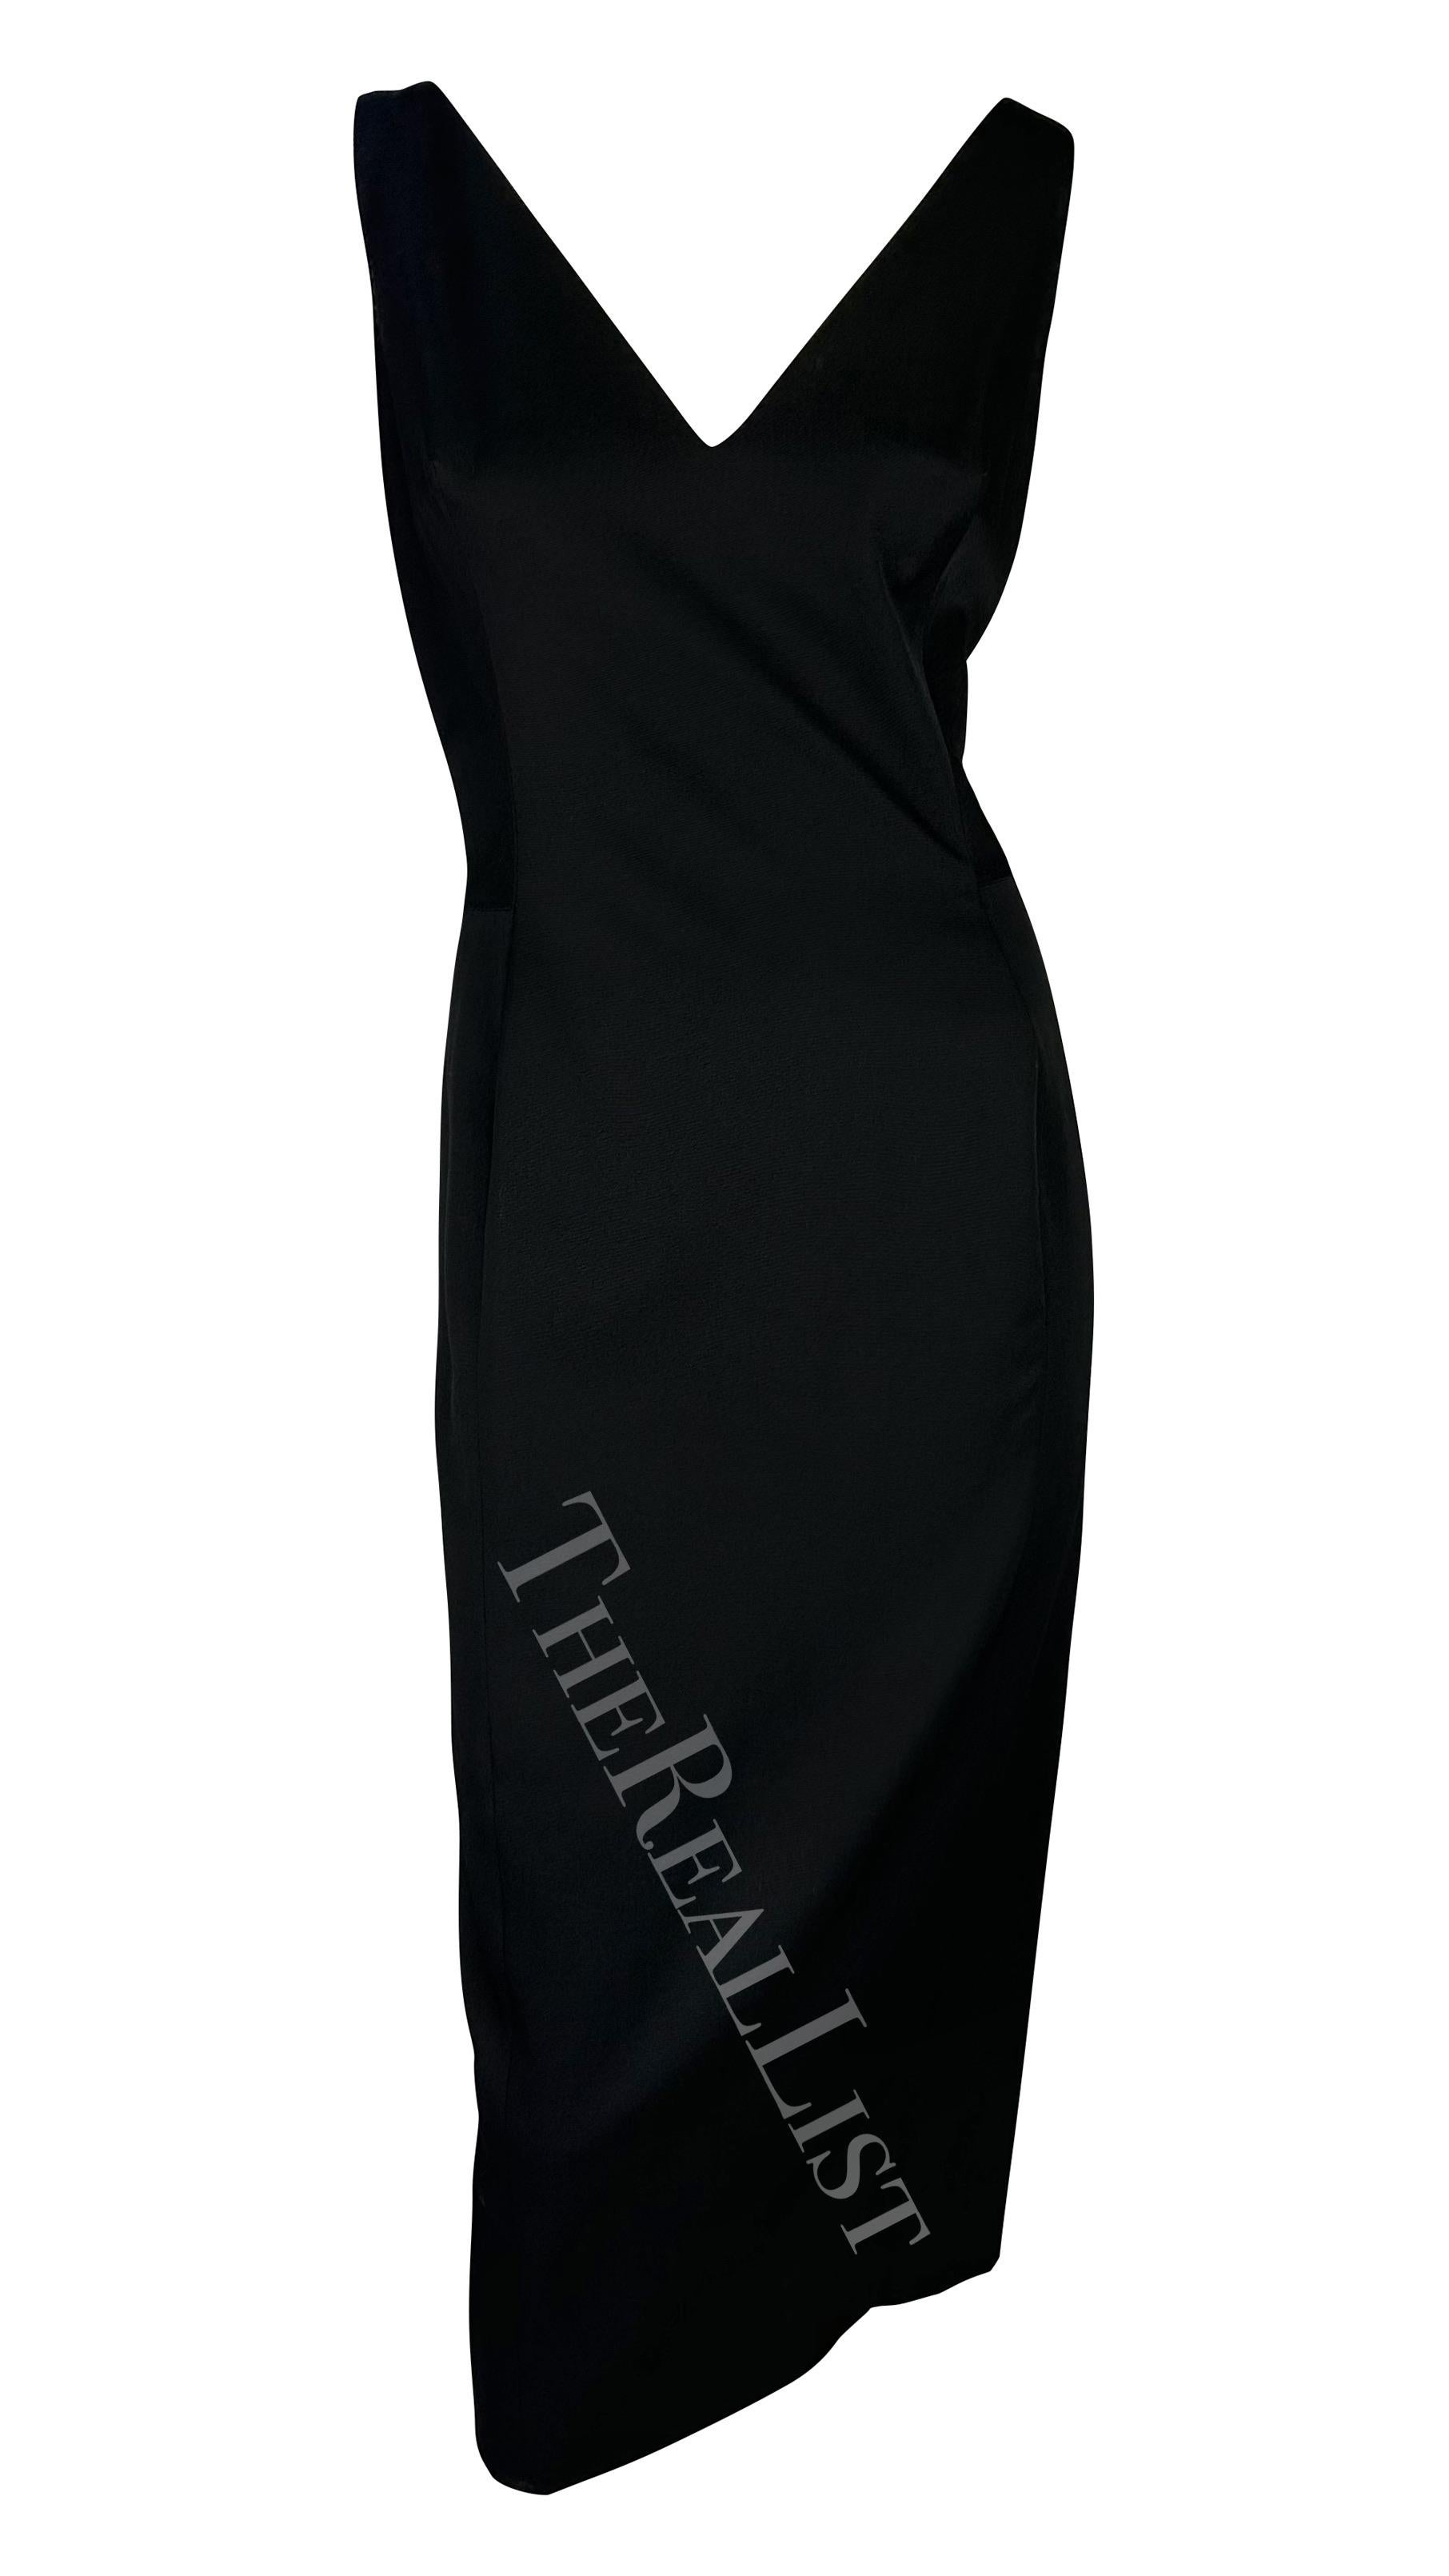 S/S 1995 John Galliano Runway Pin-Up Black Dress Houndstooth Blazer Set For Sale 3